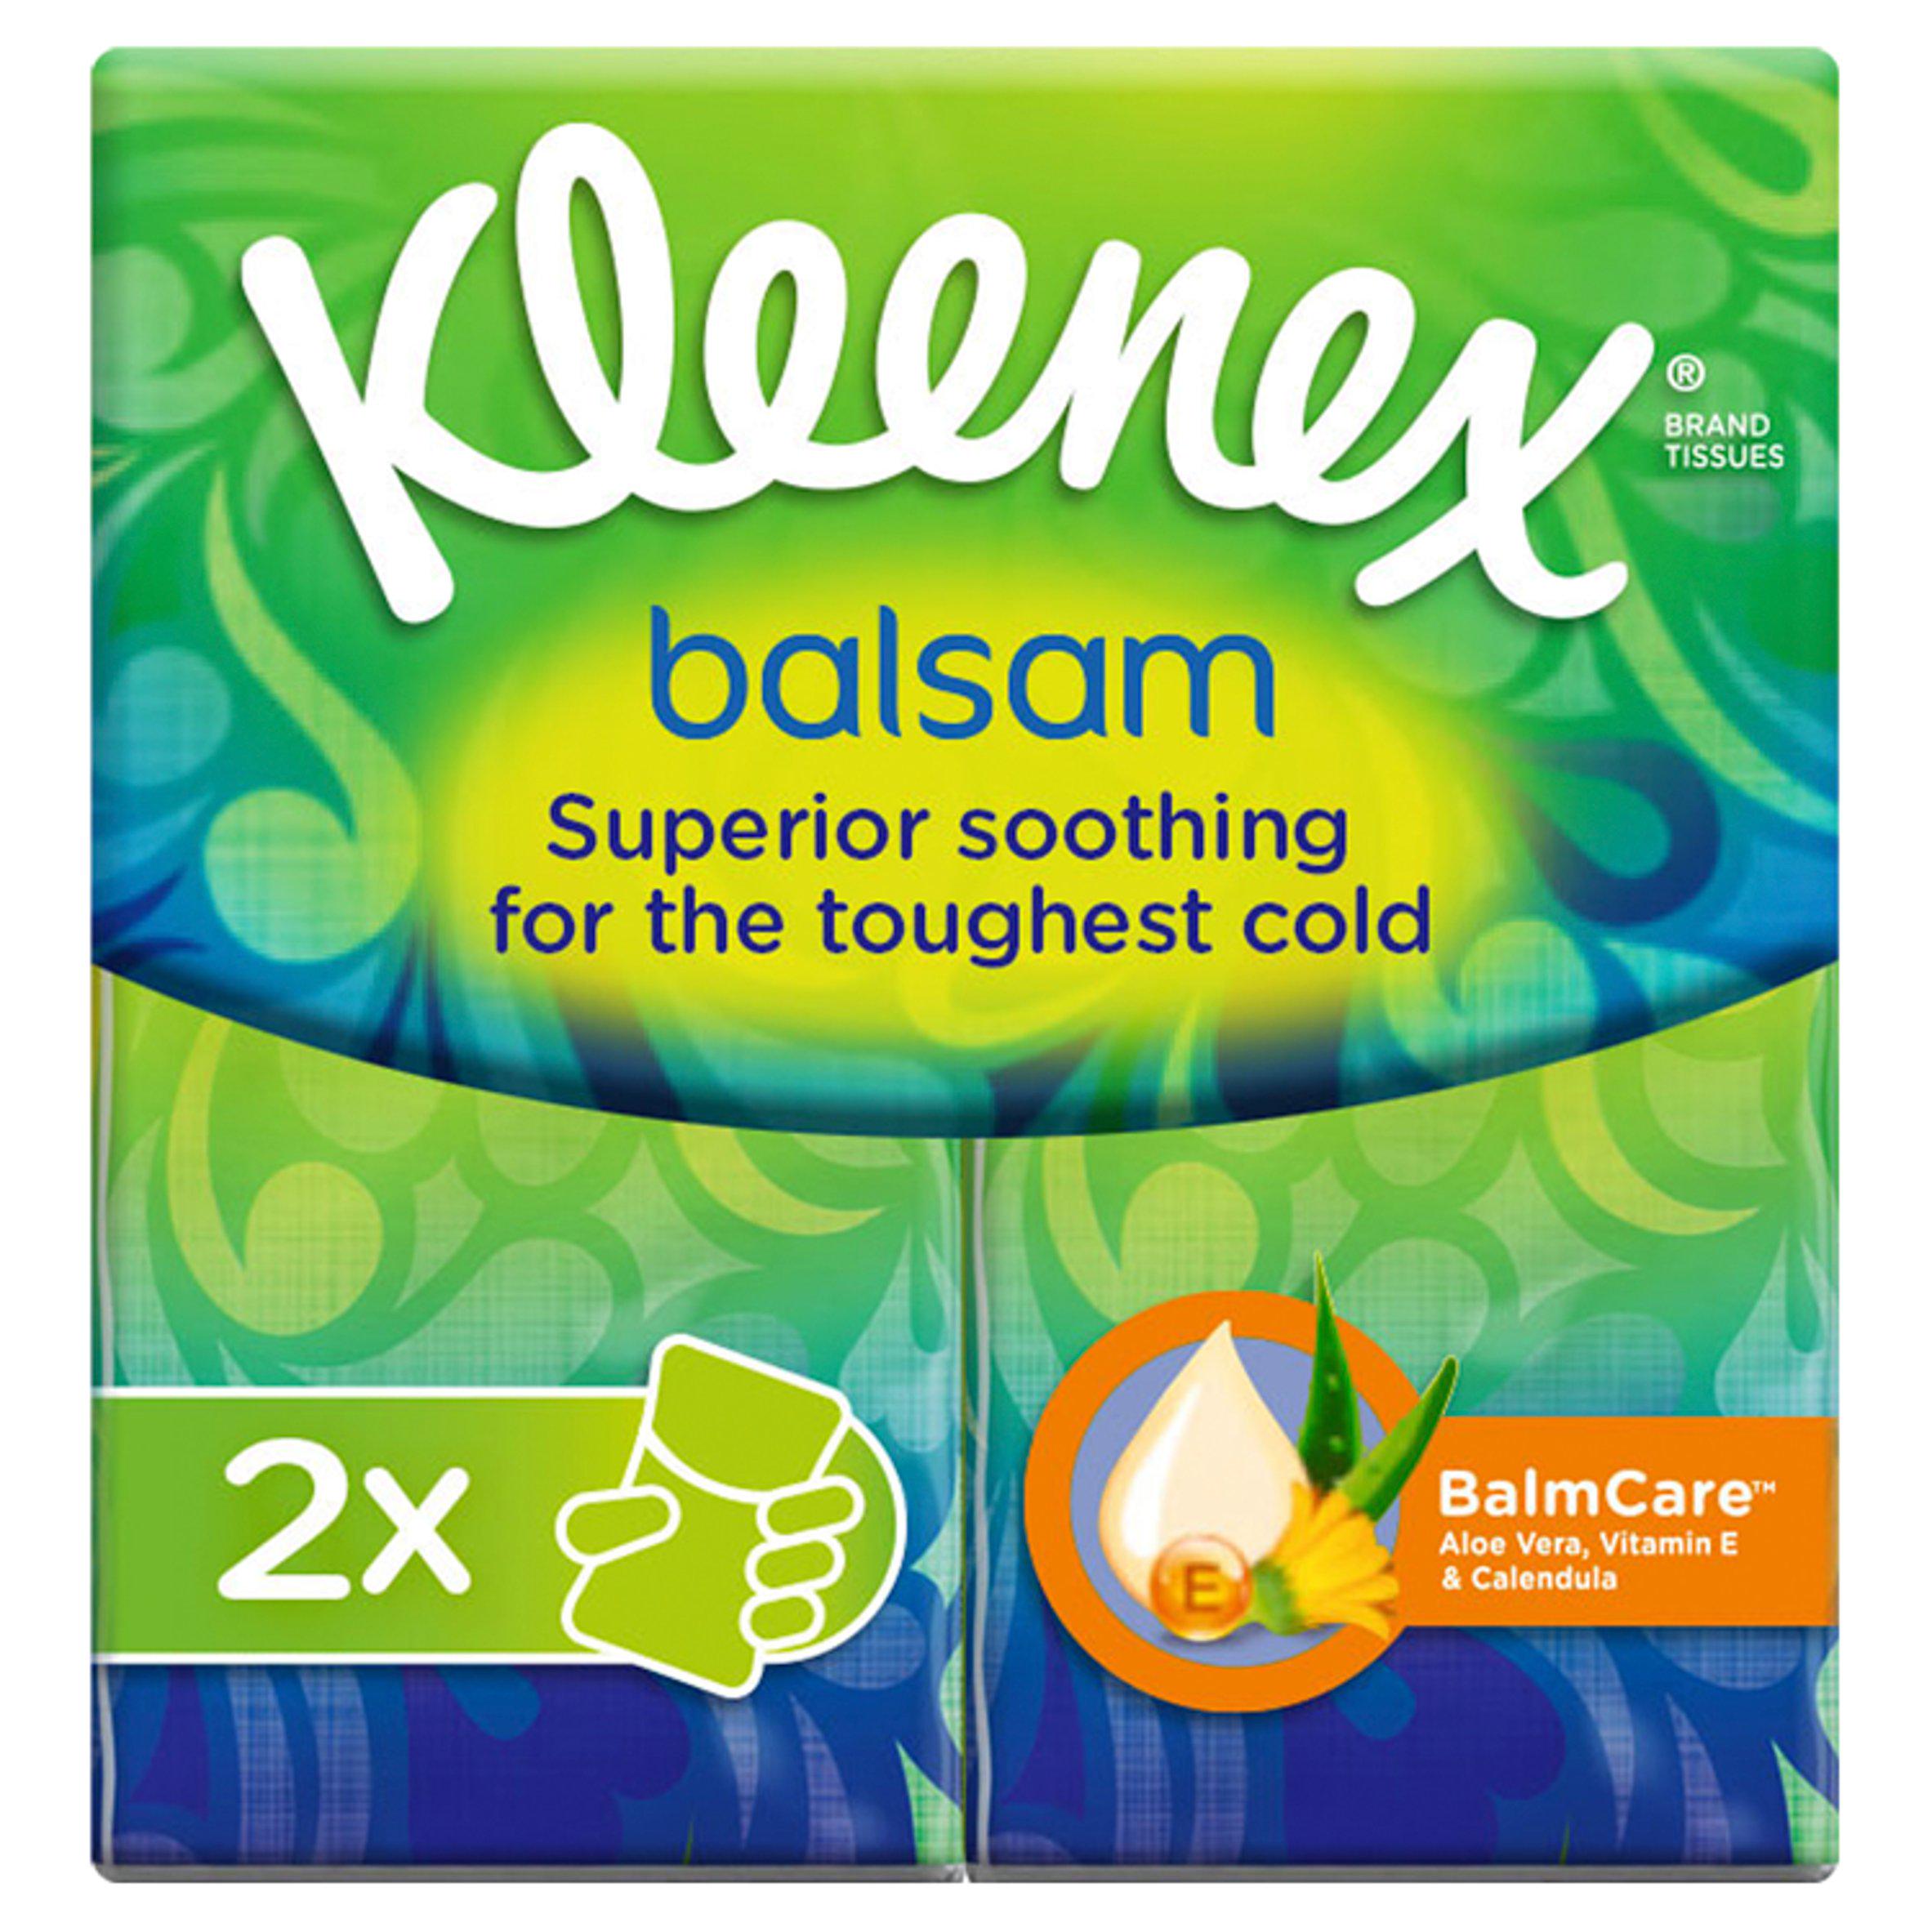 Kleenex Balsam Twin Tissues Pocket Pack Image 1